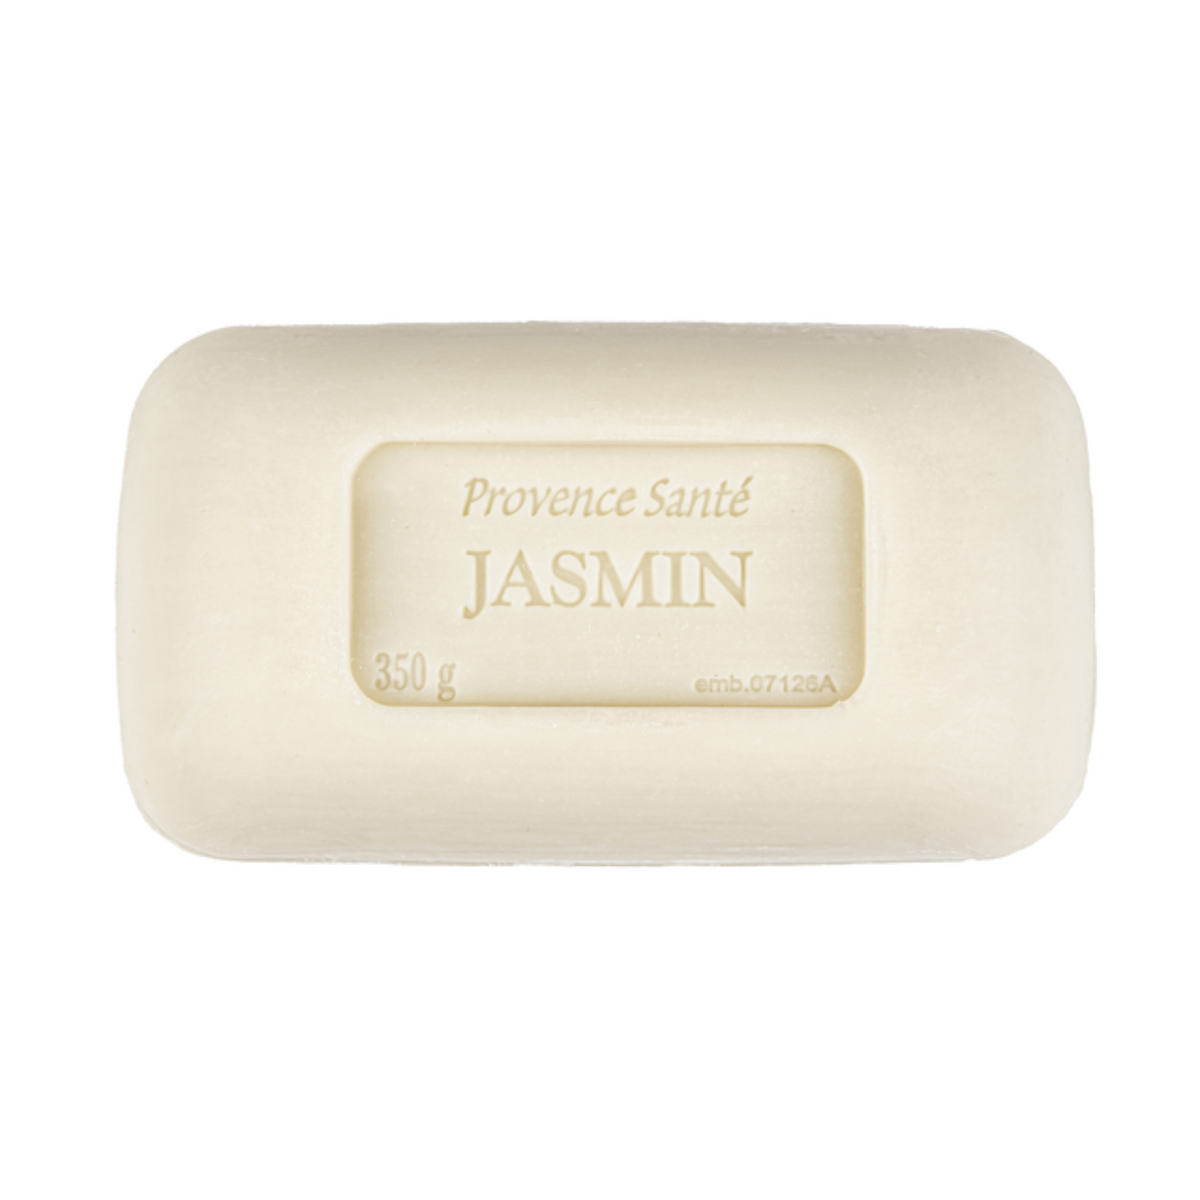 Primary Image of Provence Sante Jasmine Big Bar Soap (12 oz)